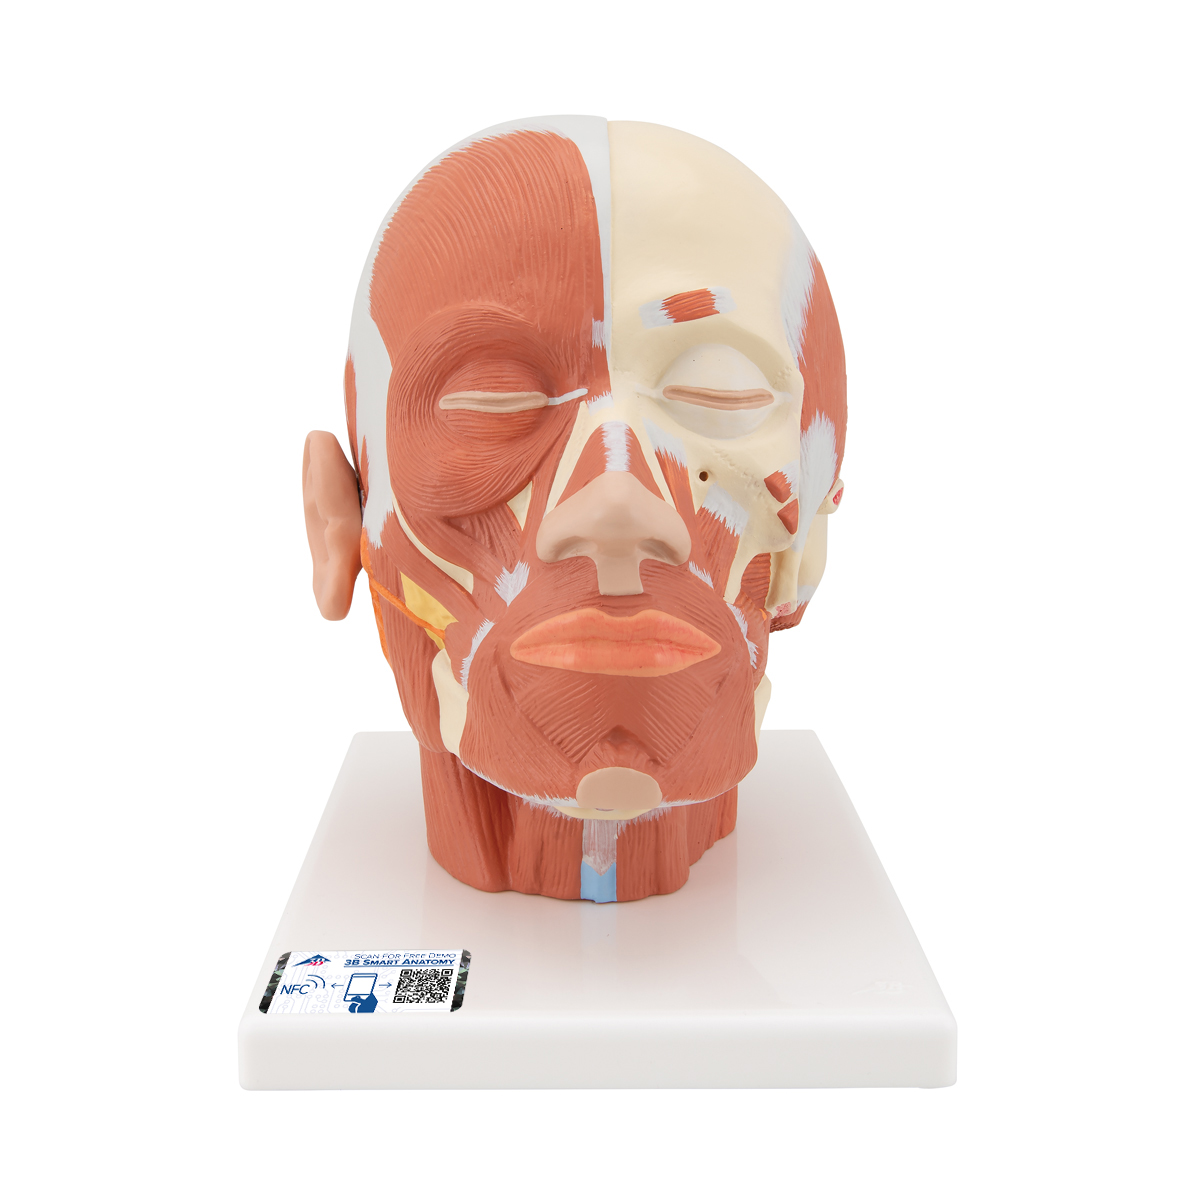 Kopfmodell mit Muskulatur - 3B Smart Anatomy, Bestellnummer 1001239, VB127, 3B Scientific